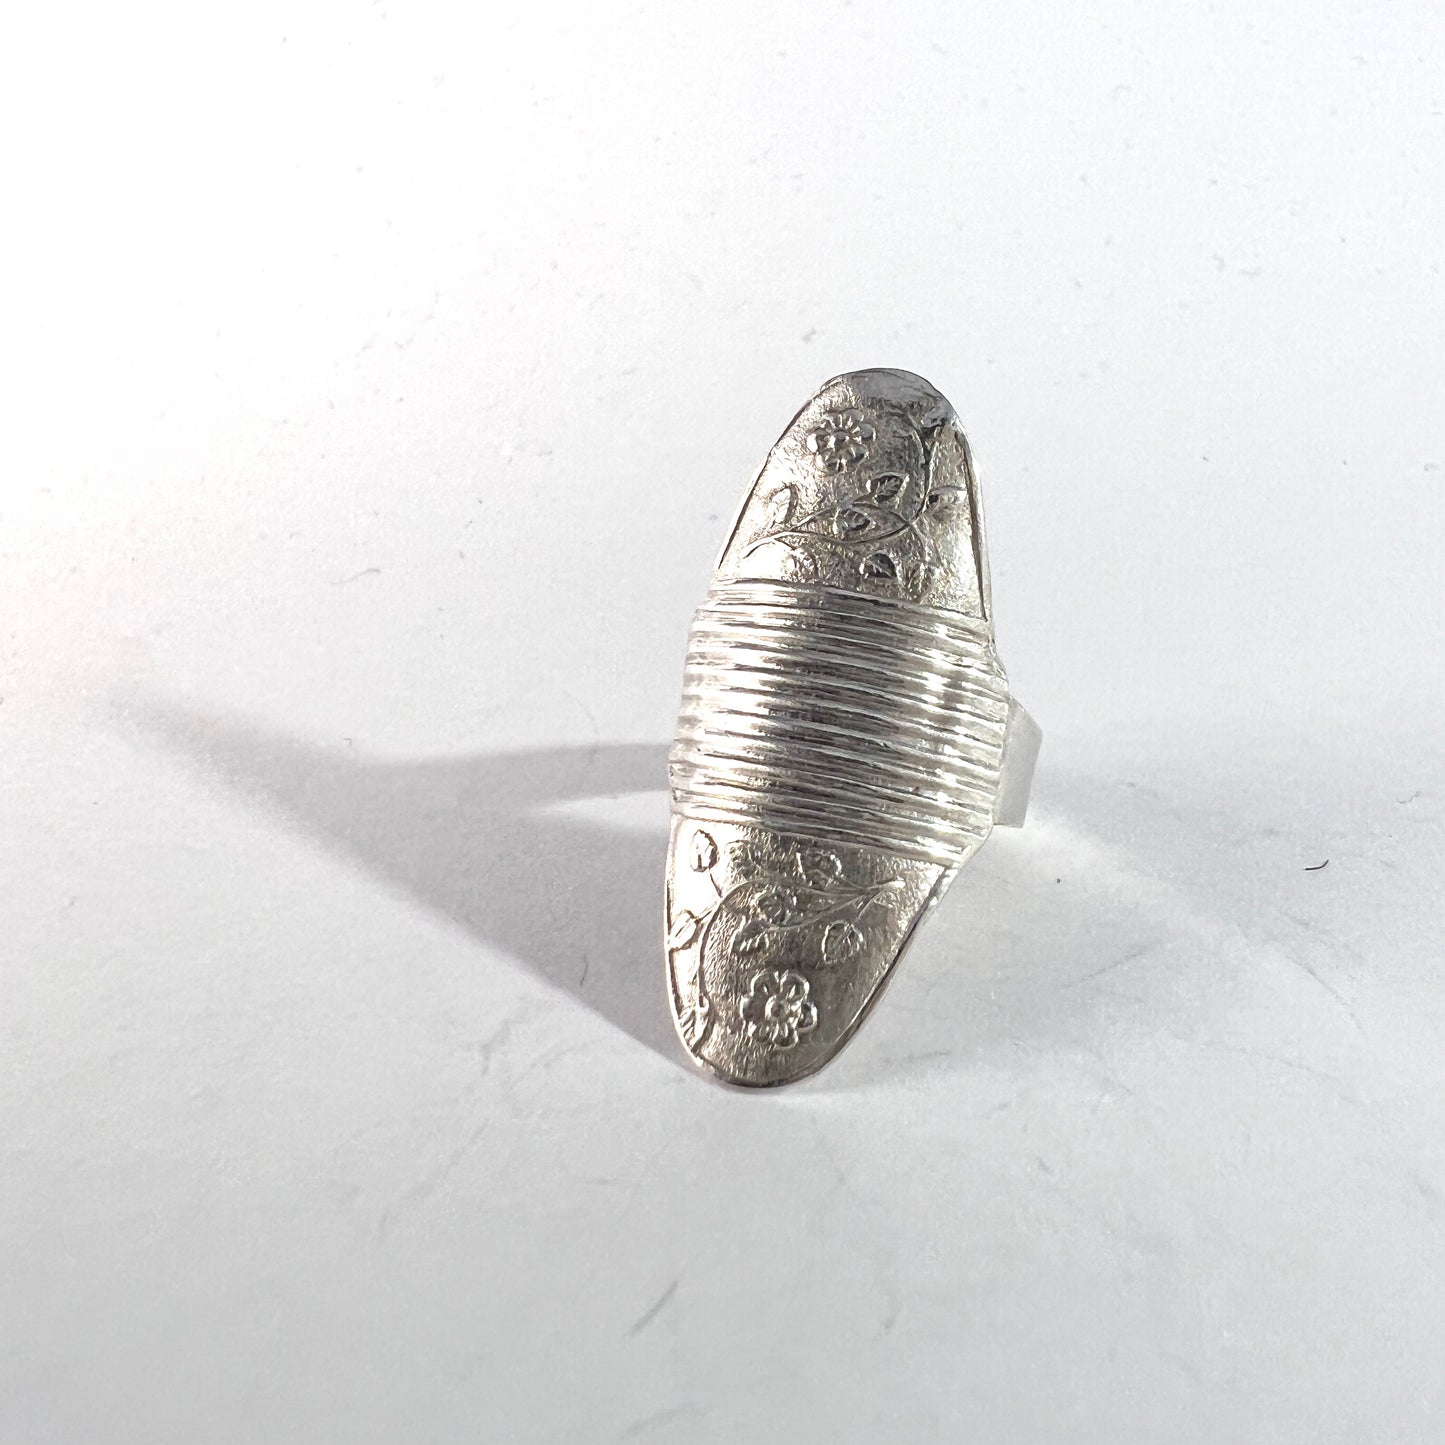 AR Örebro, Sweden year 1857. Antique Solid Silver Thimble Ring.